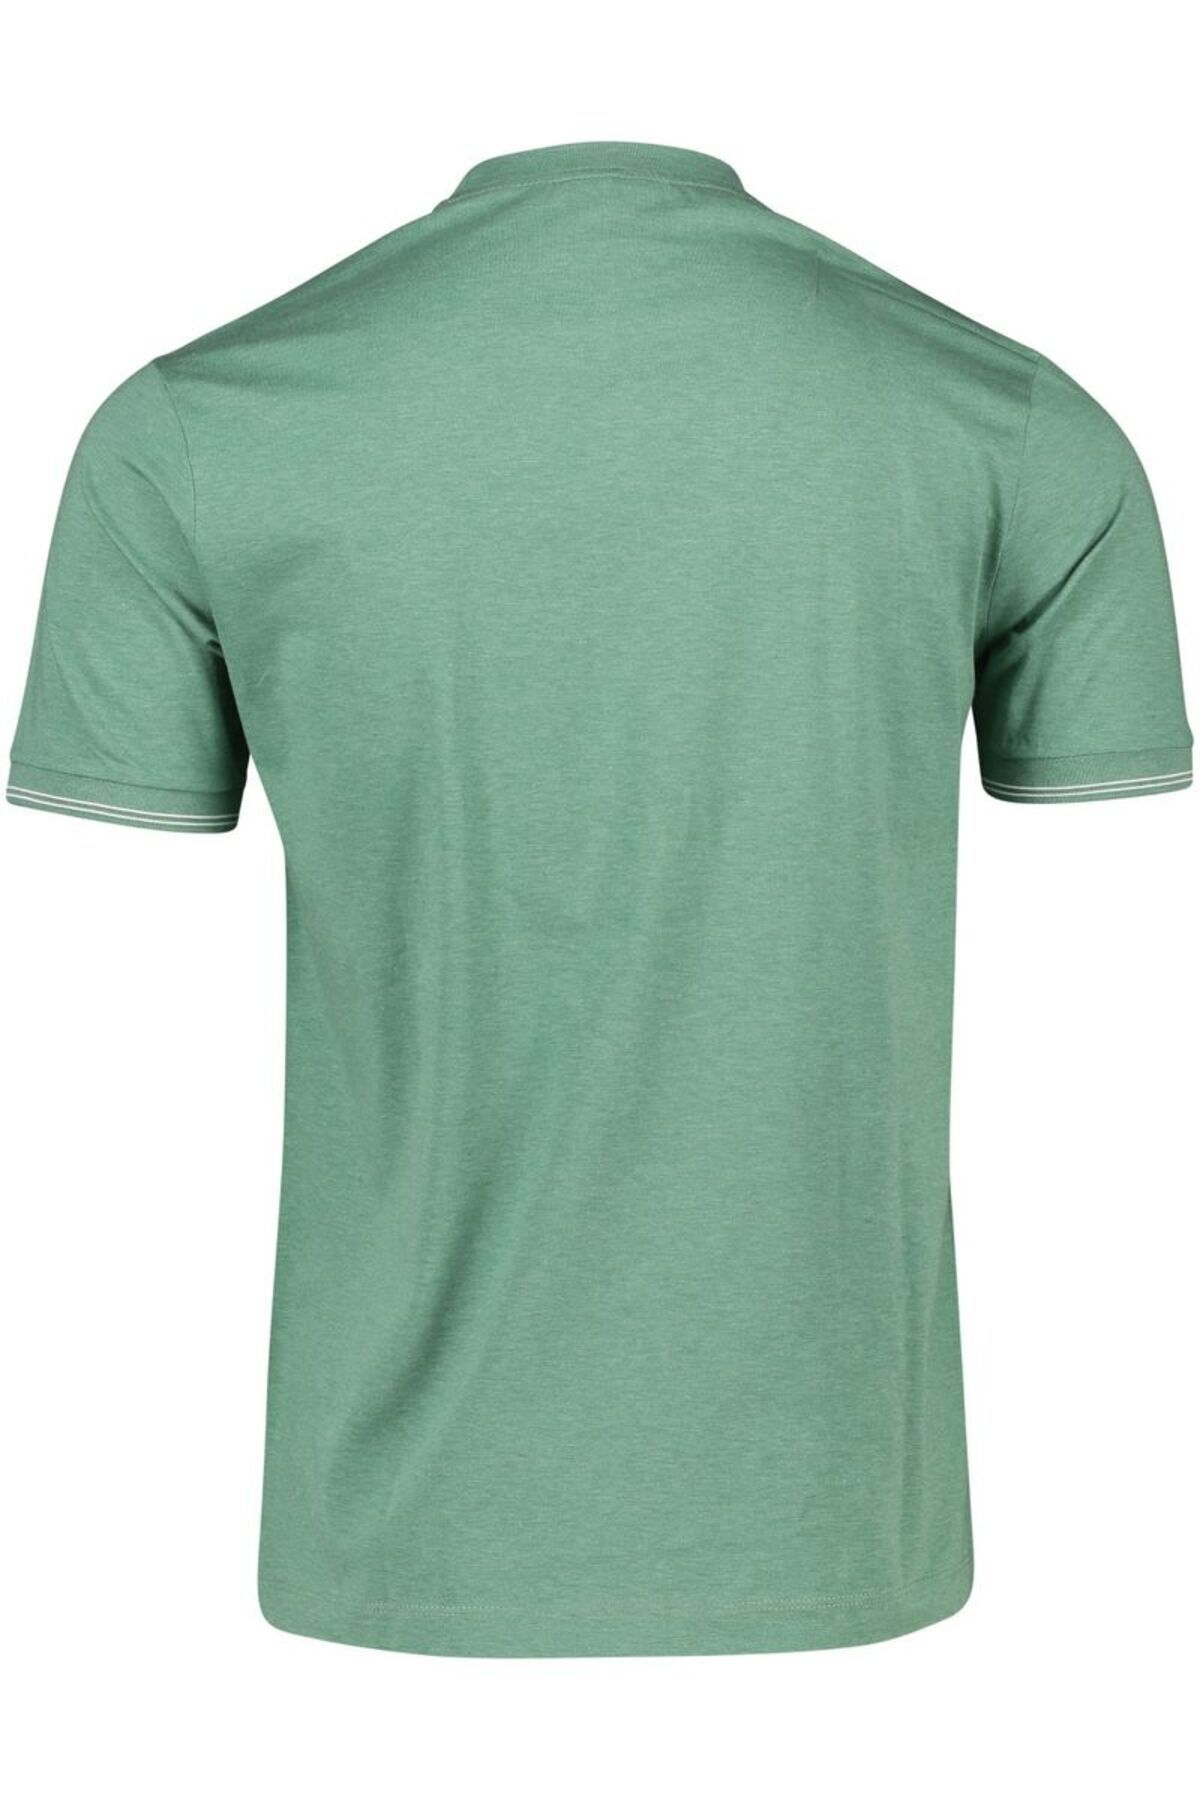 Paul&Shark Erkek %100 Pamuklu Regular Fit Kısa Kollu Çok Renkli T-Shirt 22411083-172